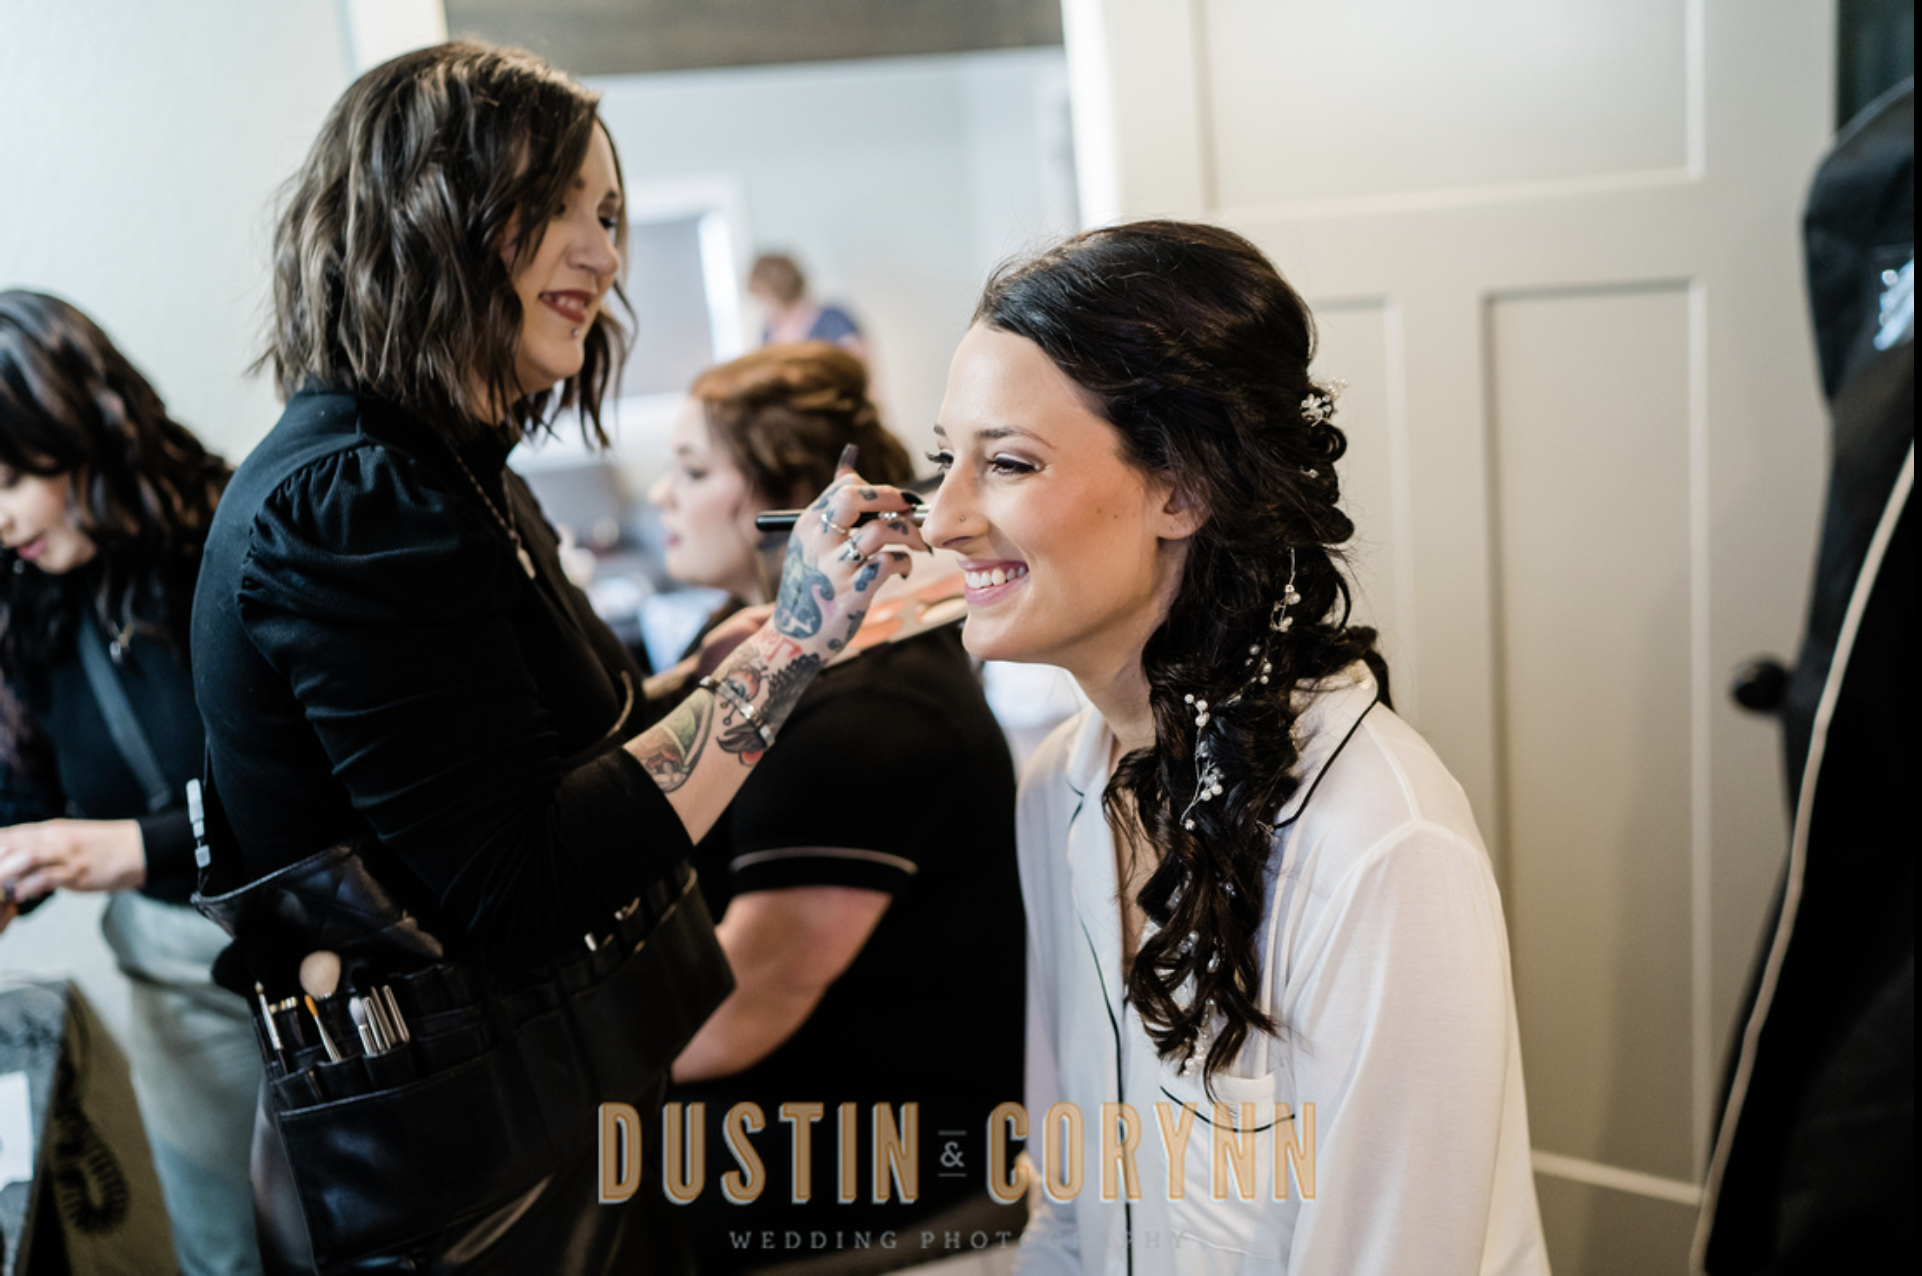 Fort Wayne wedding photographer captures bride getting makeup done on wedding day